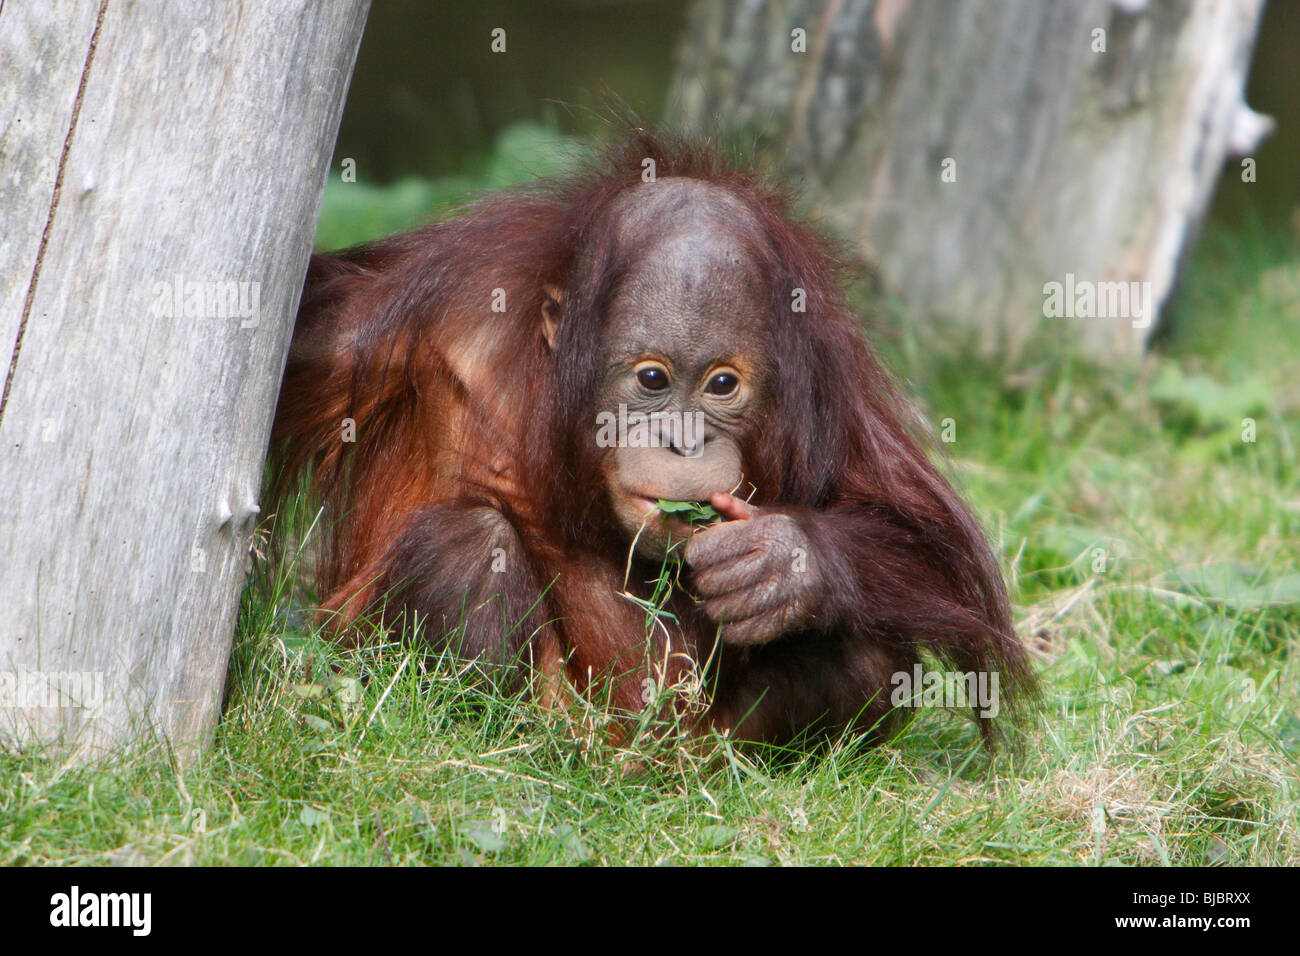 Orango (Pongo pygmaeus), bayby seduta sul terreno di erba da masticare, Foto Stock